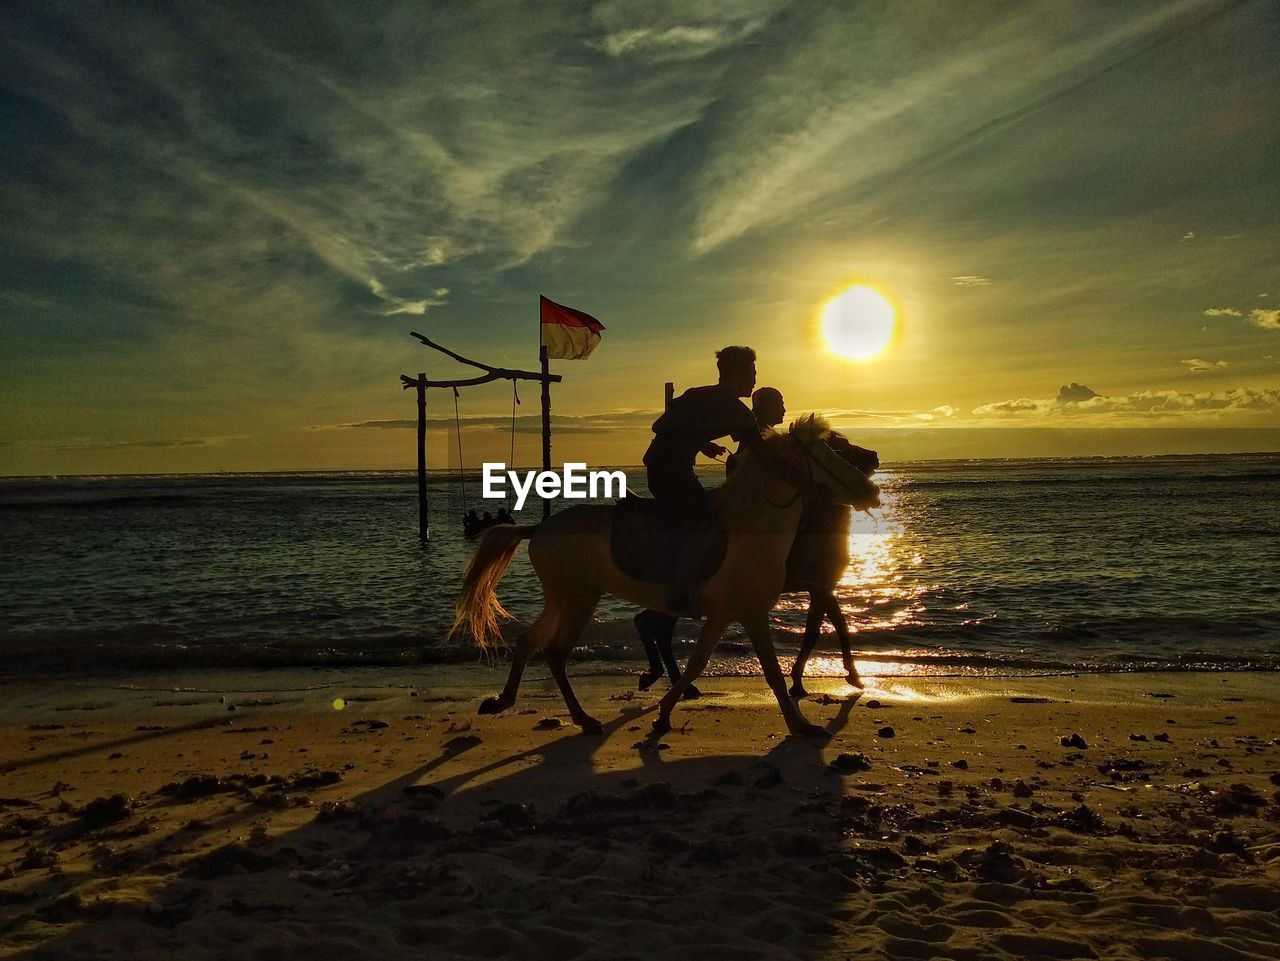 MAN RIDING HORSE ON BEACH AT SUNSET